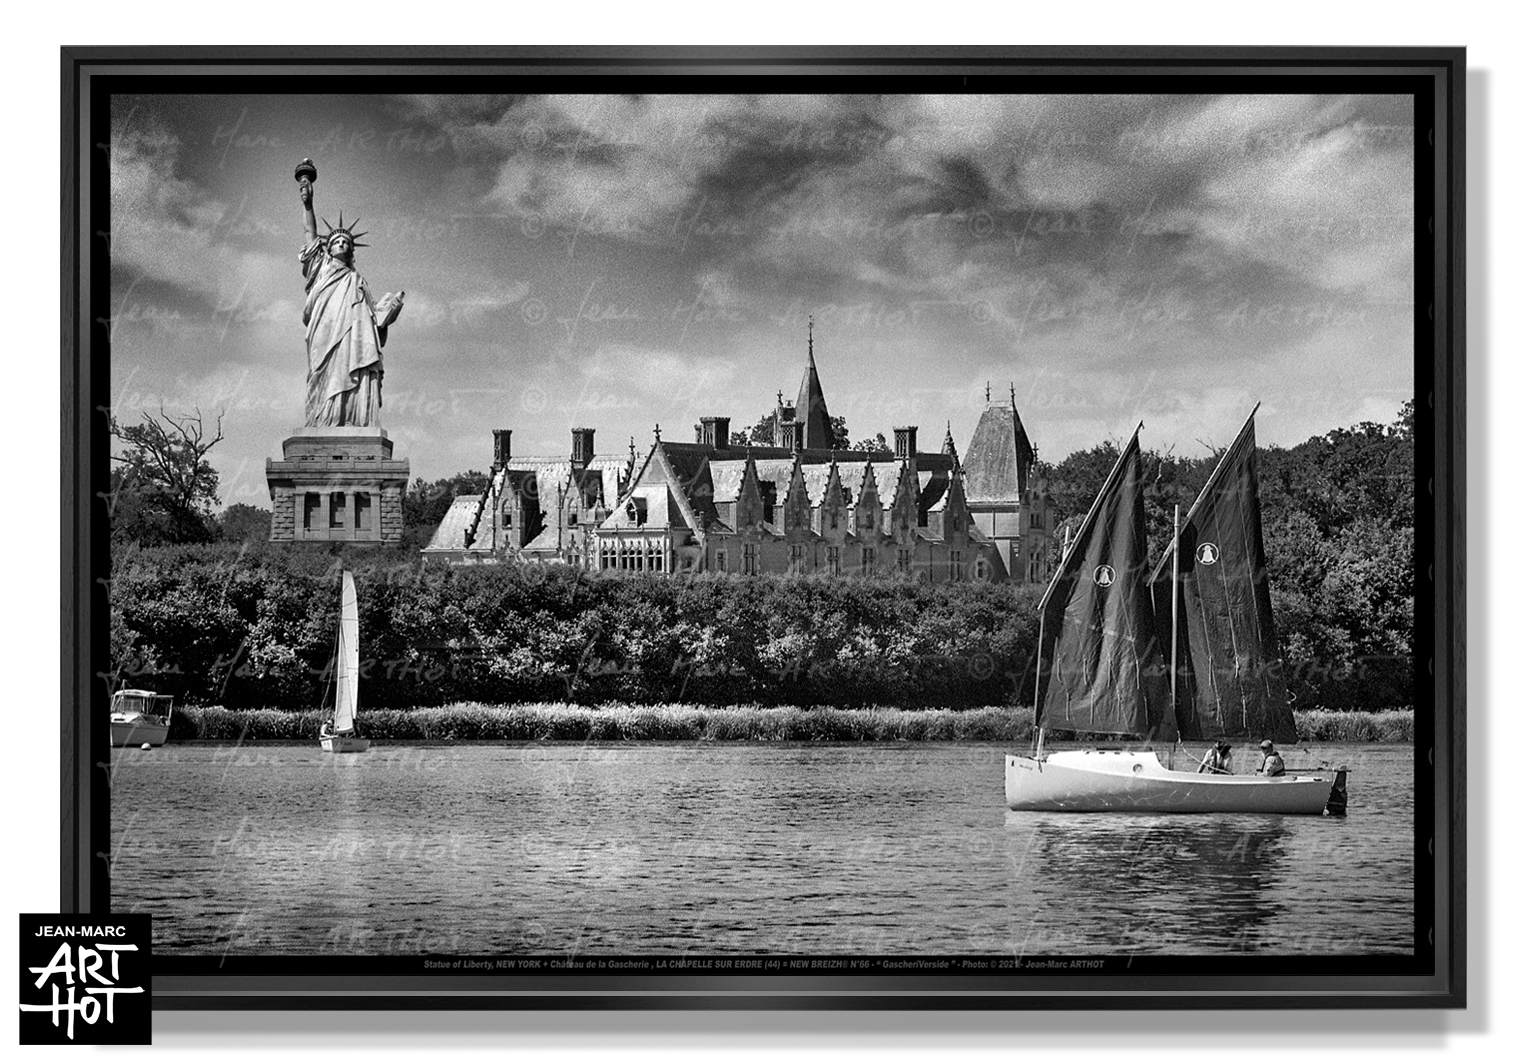 arthot-photo-art-b&w-new-york-bretagne-newbreizh-066-loire-atlantique-44-riviere-erdre-chateau-gascherie-liberty-HORIZ